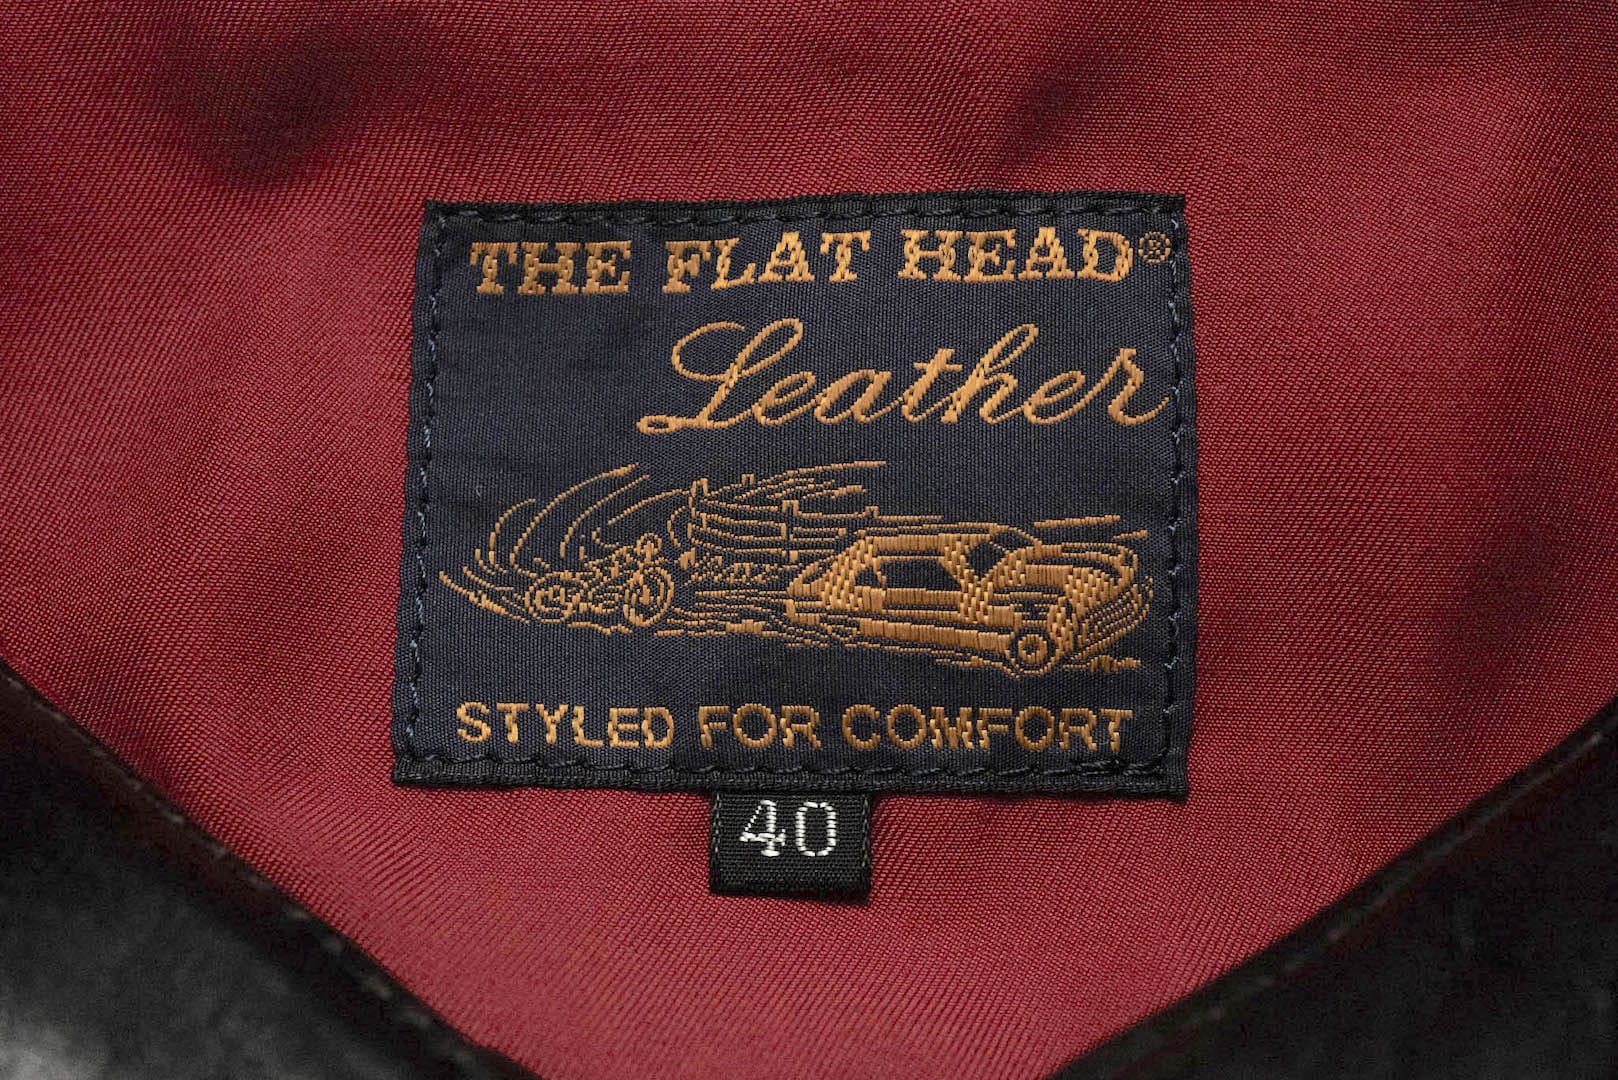 The Flat Head Horsehide Stand Collar Single Riders Jacket (Black Tea-Cored)